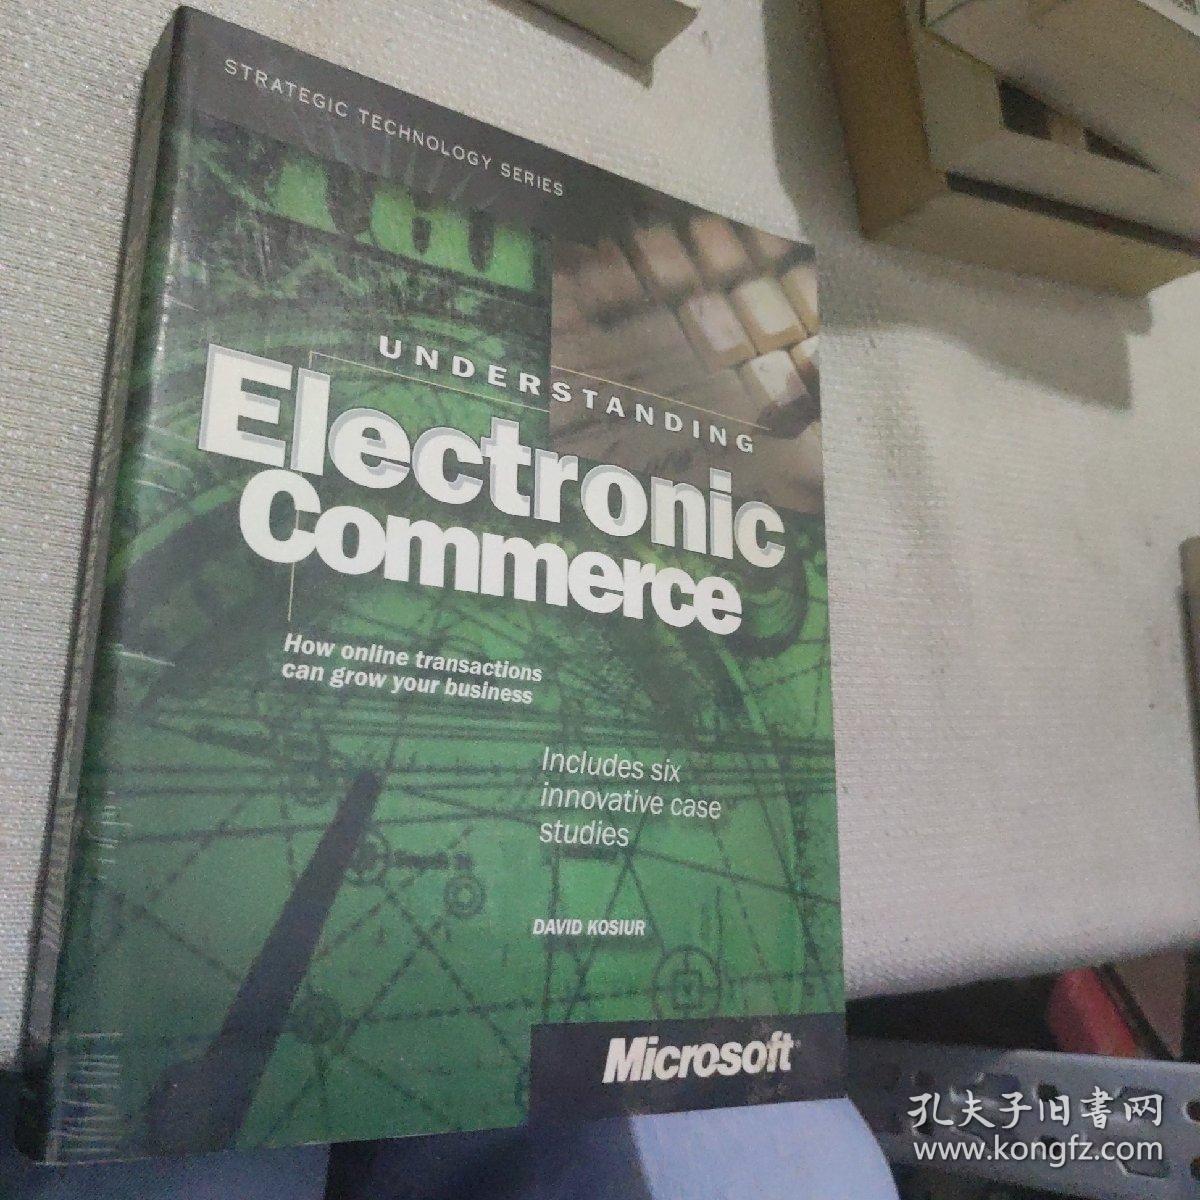 Understanding electronic commerce